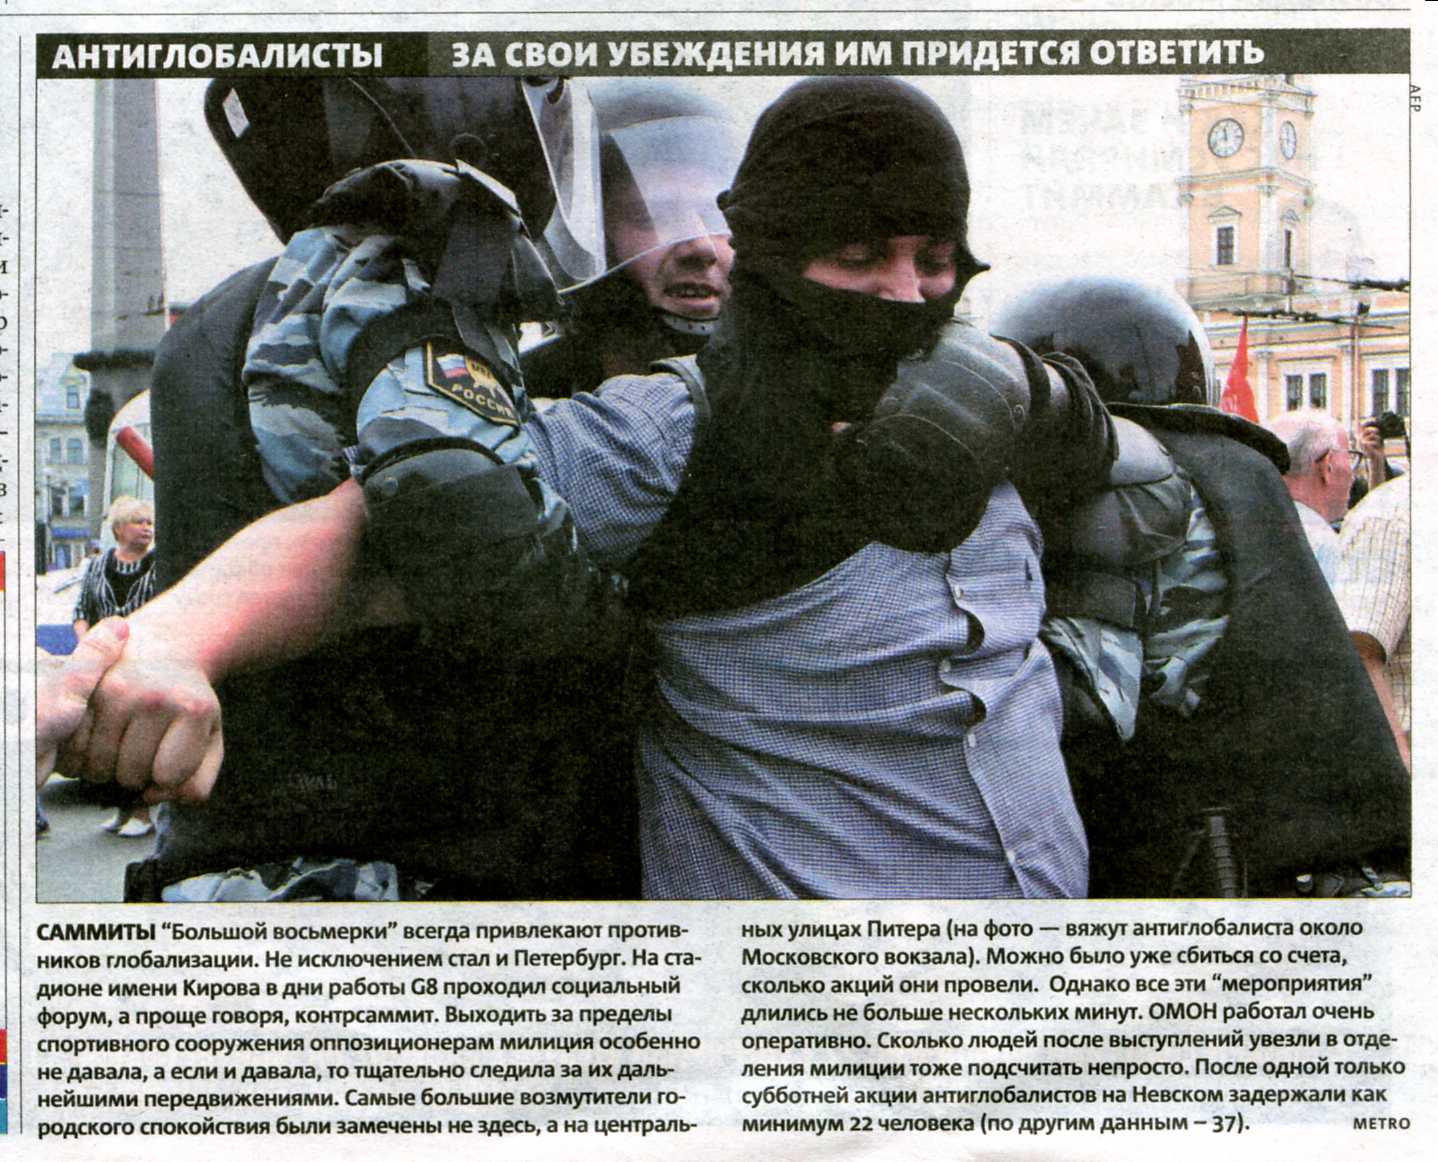 G8 Arrest Coverage in Russian free newspaper